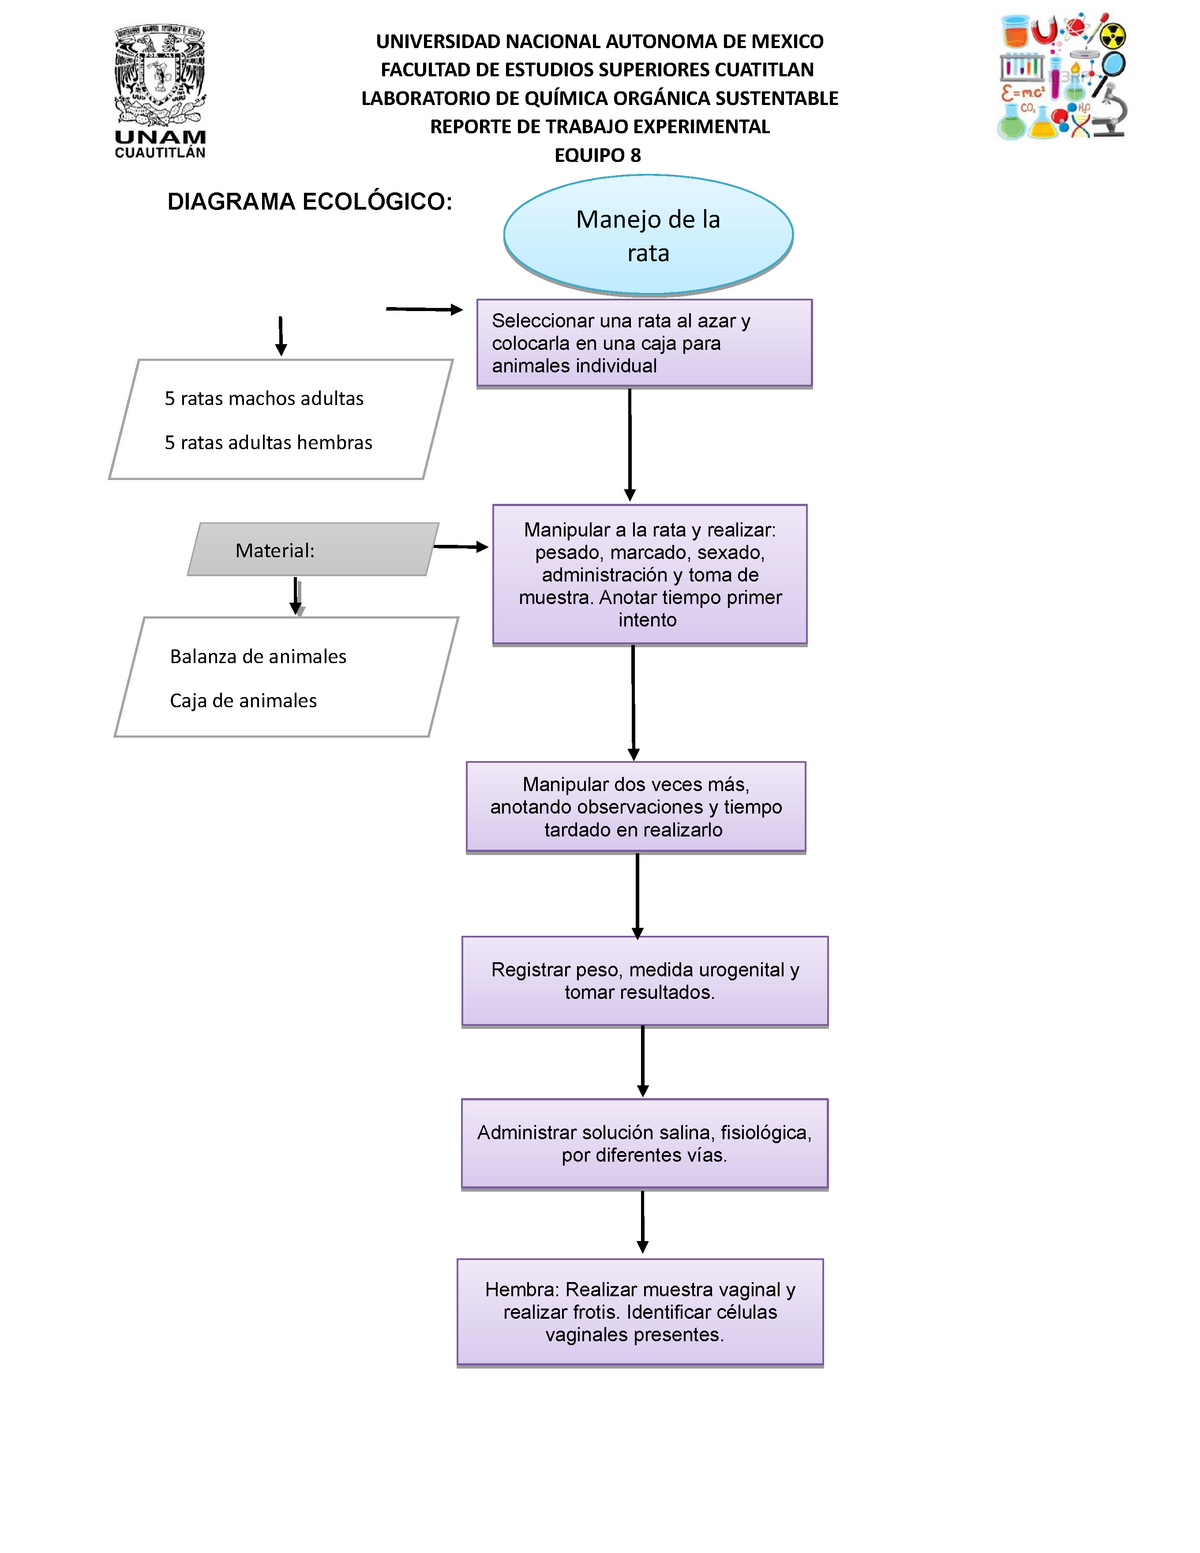 Diagrama De Flujo Manejo De La Rata Diagrama EcolÓgico Universidad Nacional Autonoma De 2163